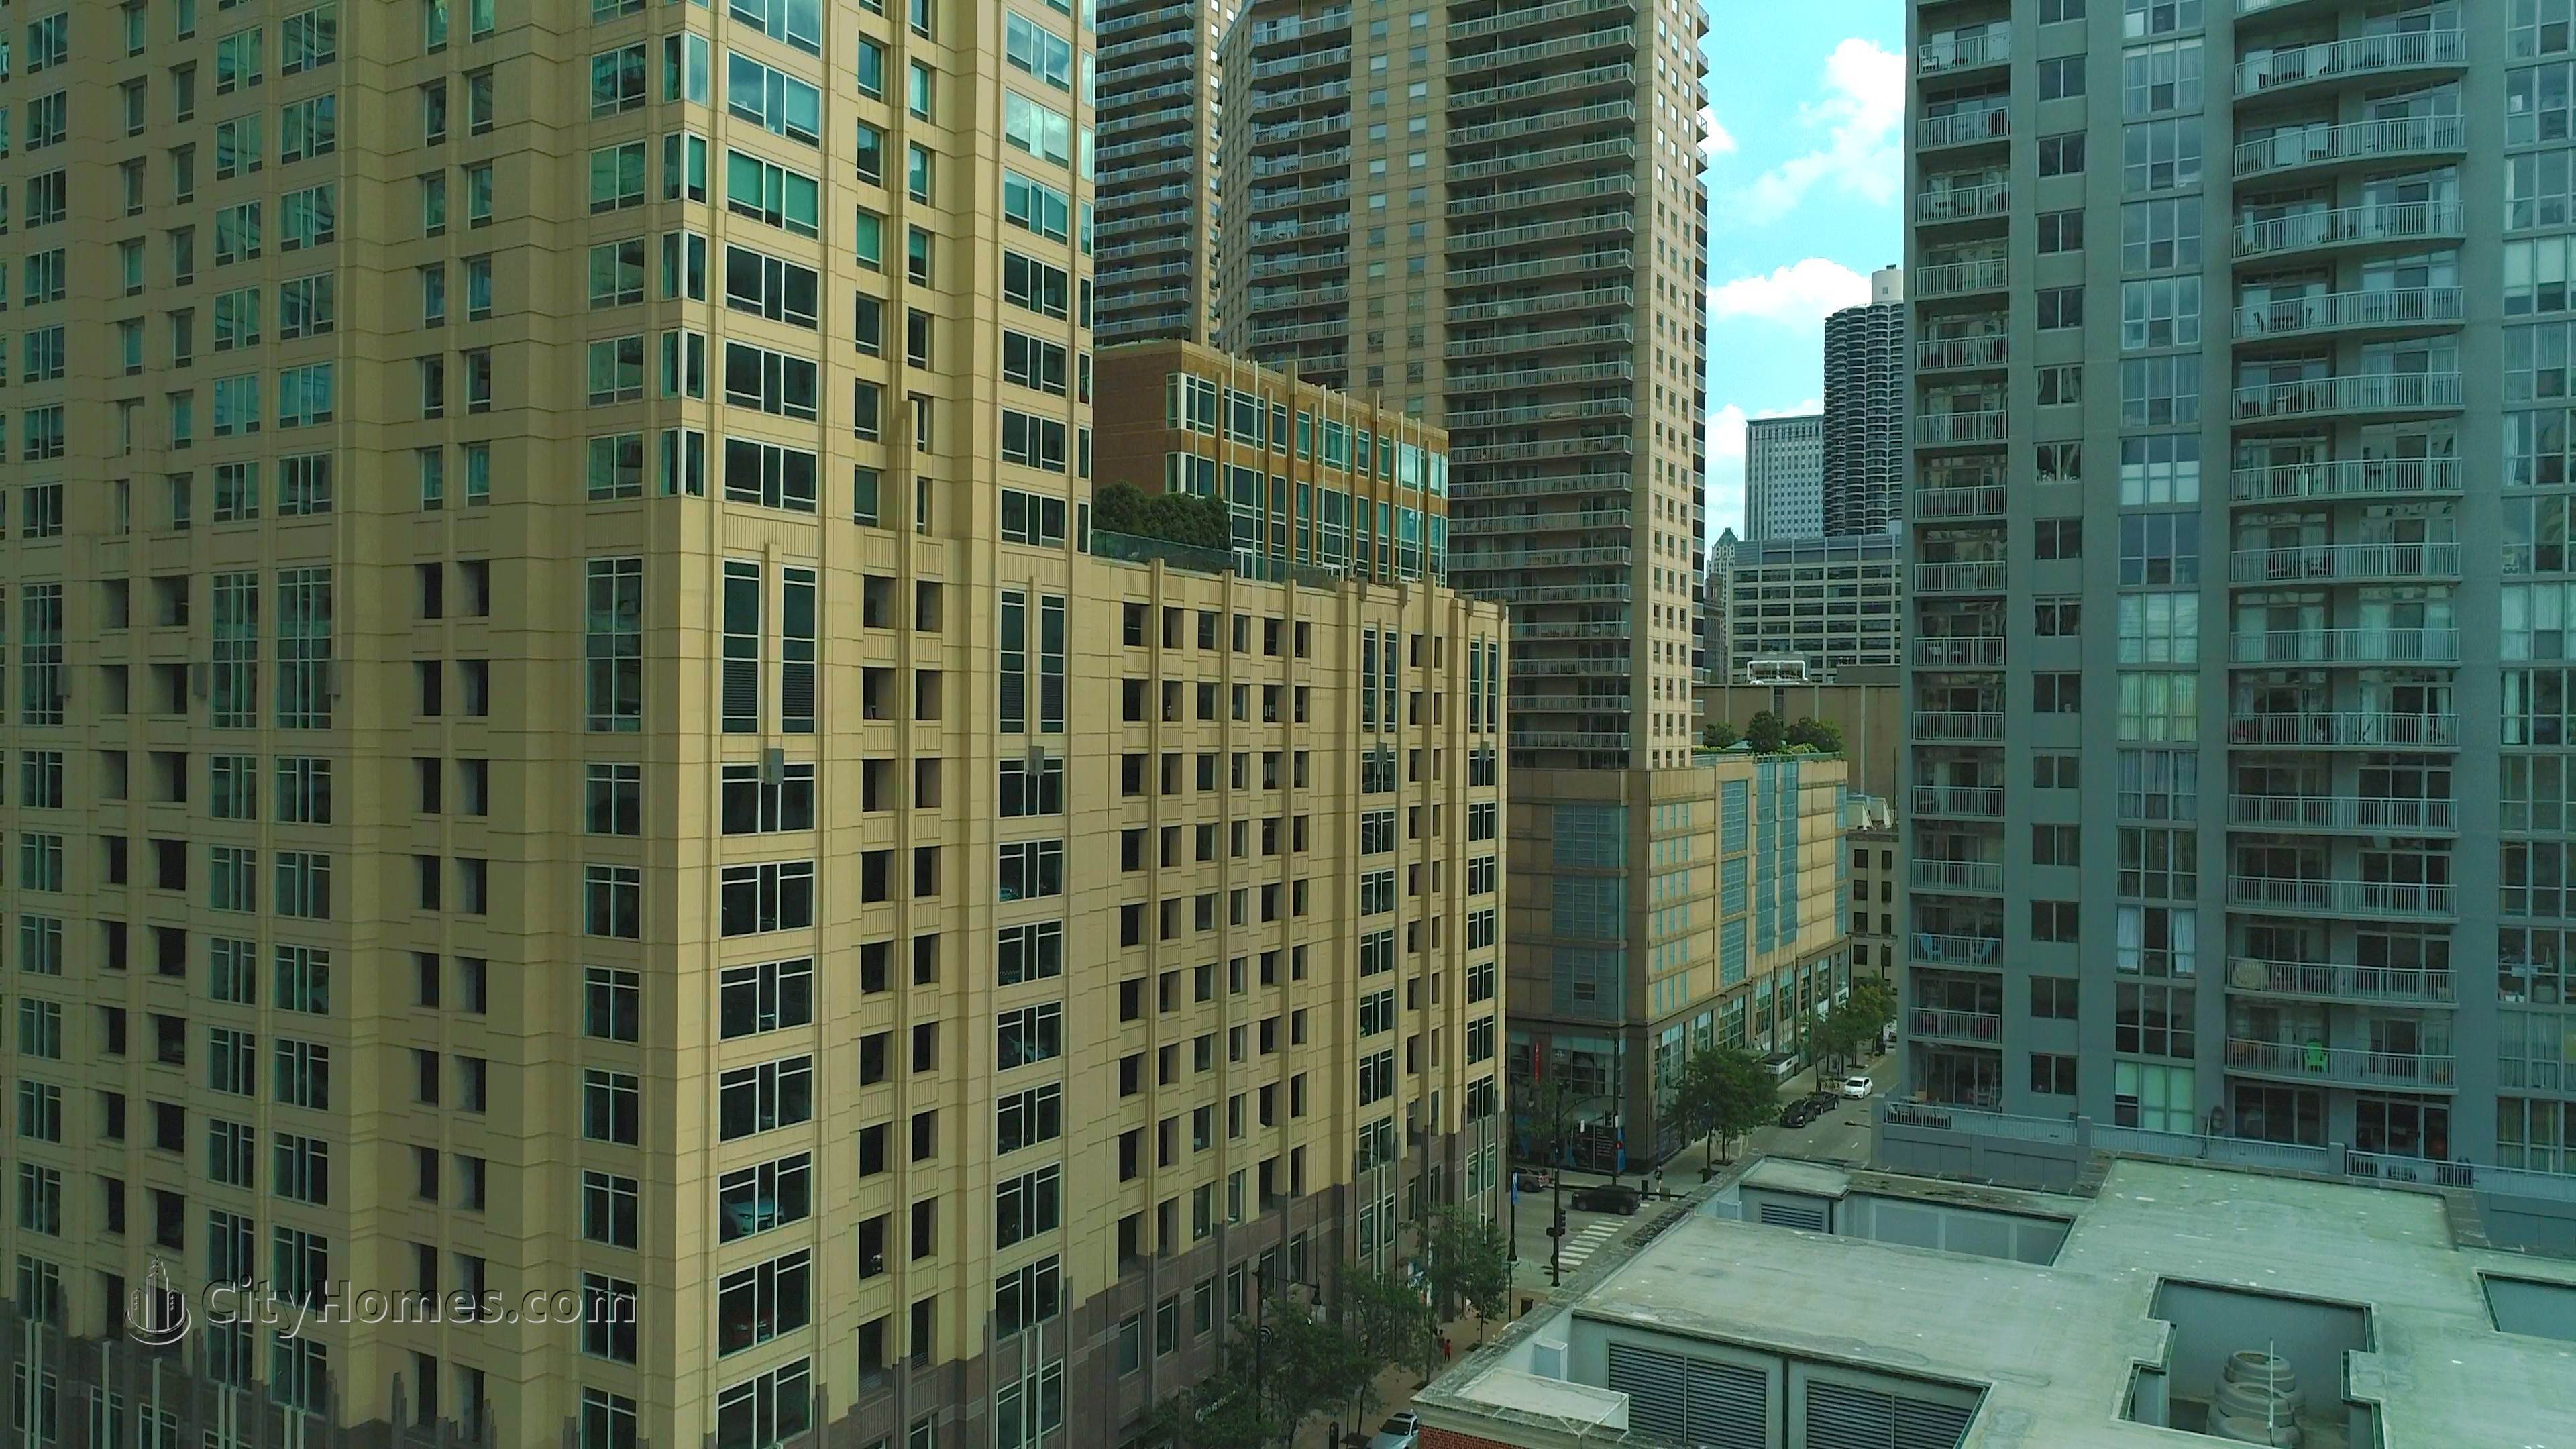 Millennium Centre建於 33 W Ontario St, Central Chicago, 芝加哥, IL 60610